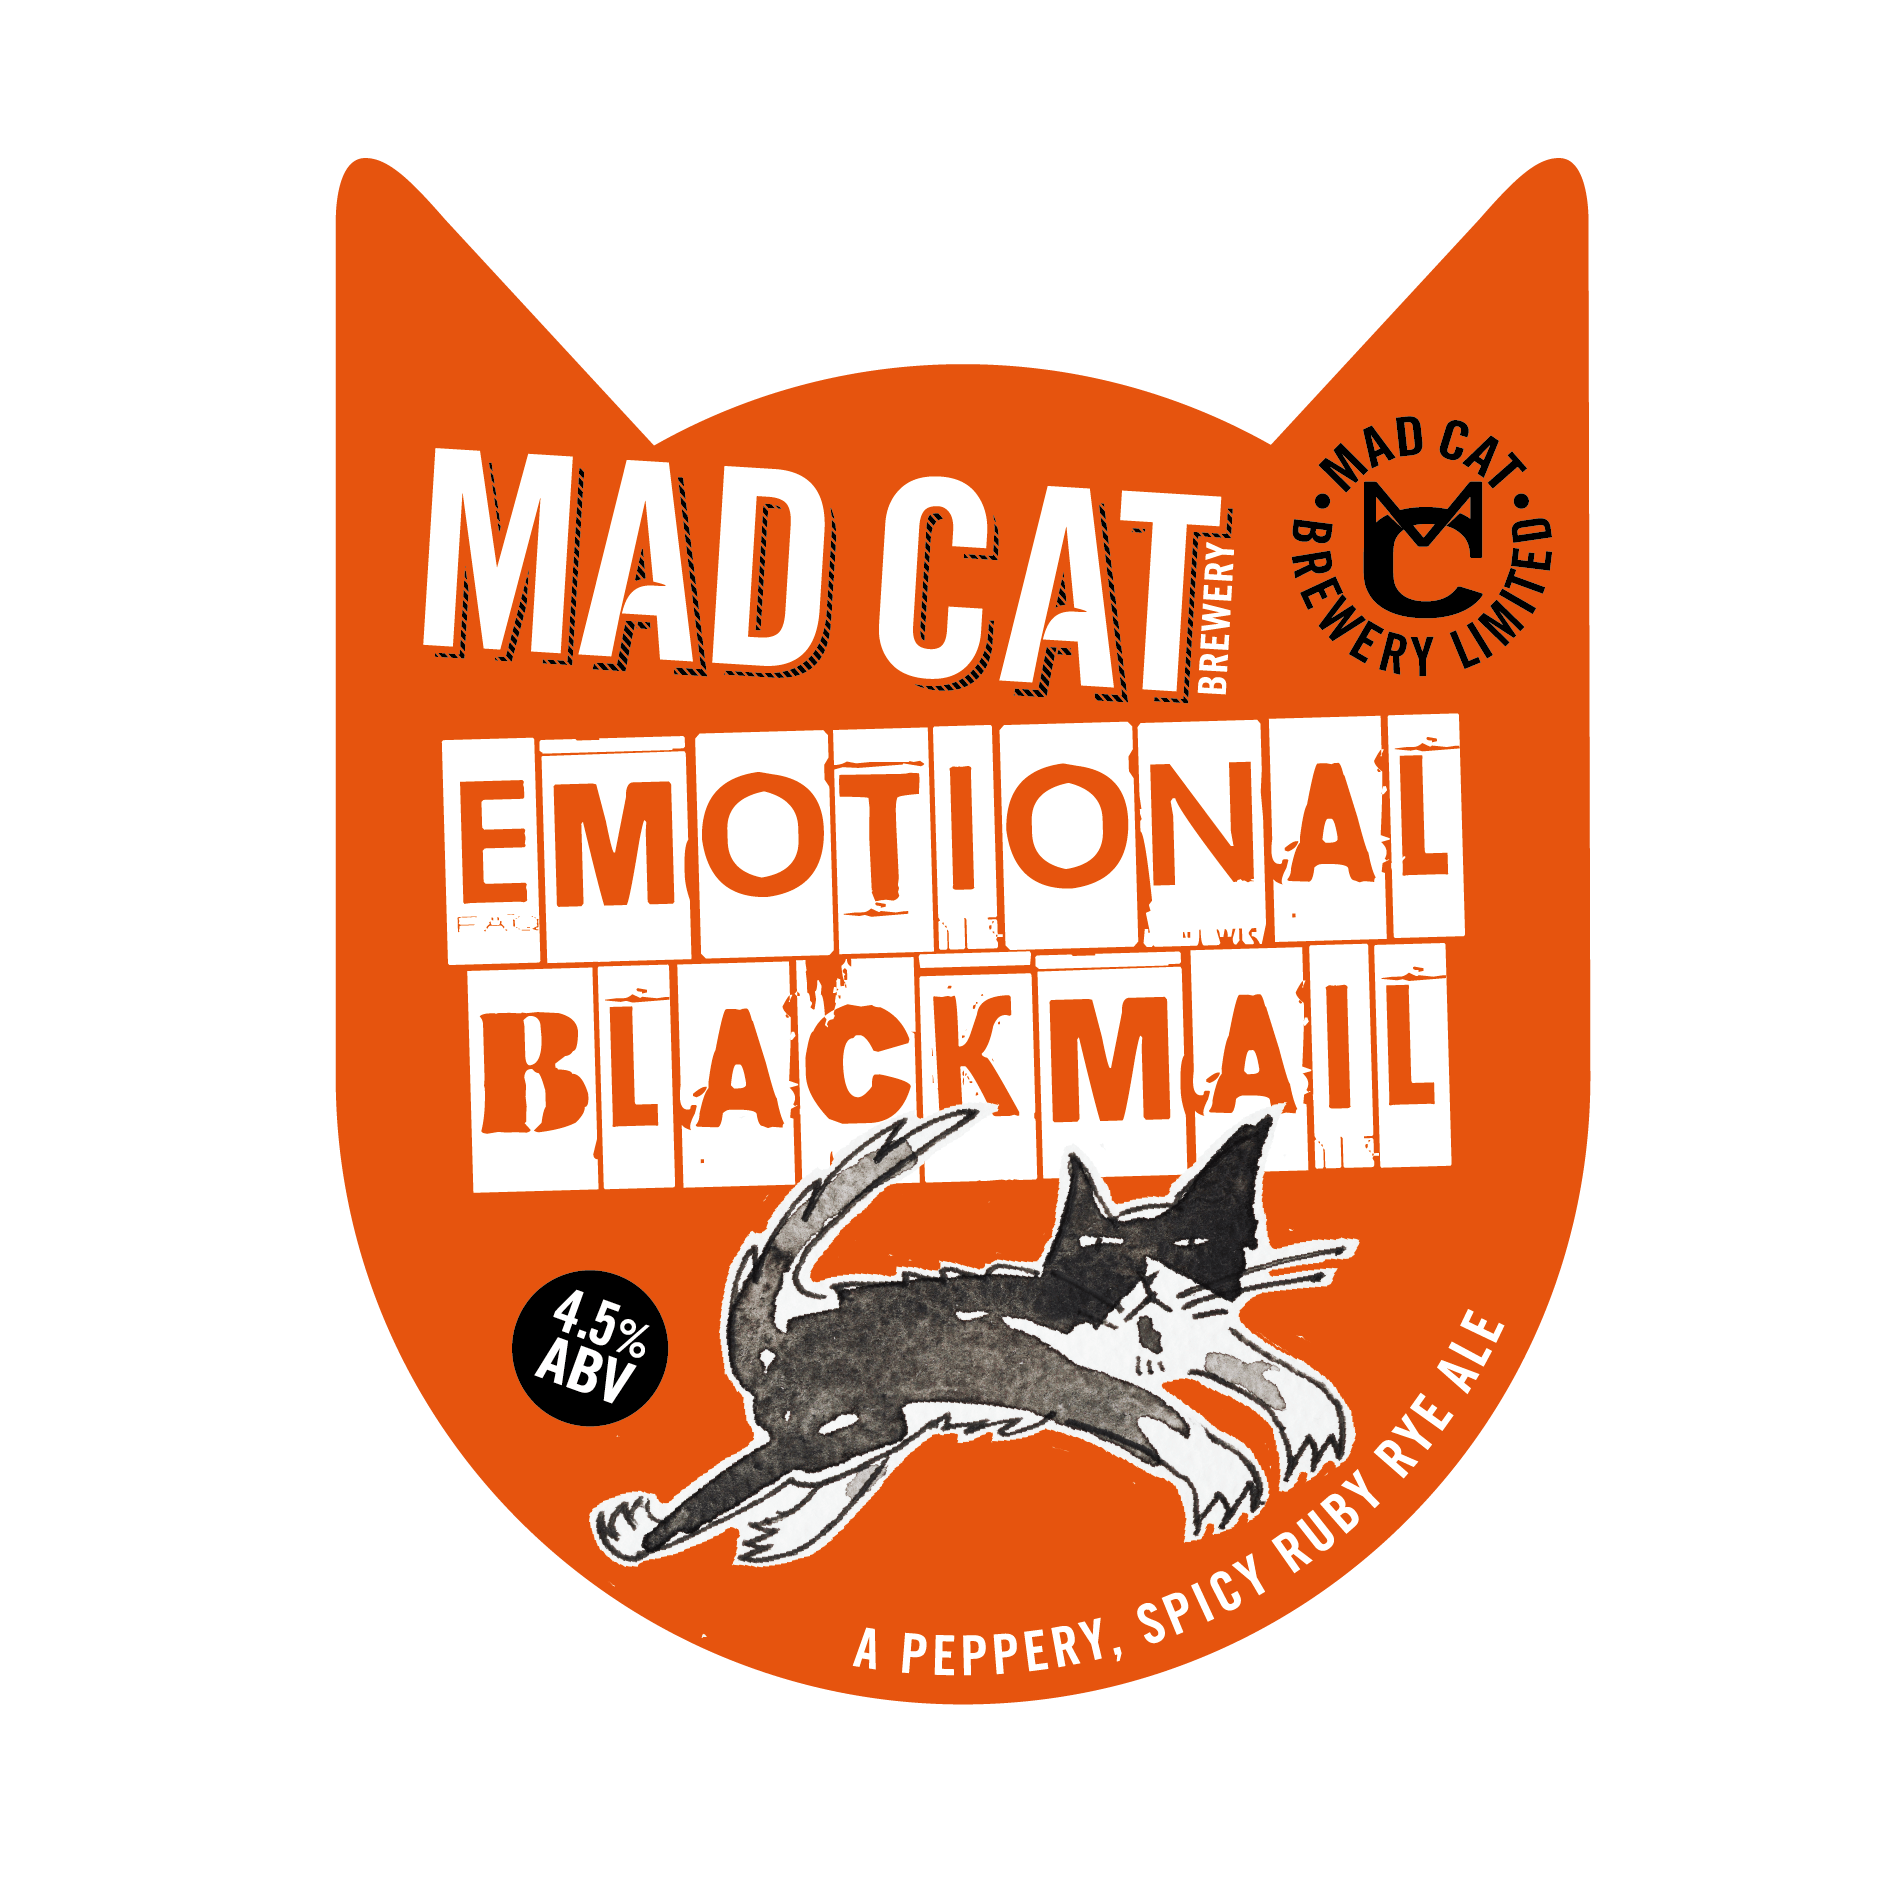 Black Mail Logo - Emotional Blackmail 4.5% Cat BreweryMad Cat Brewery